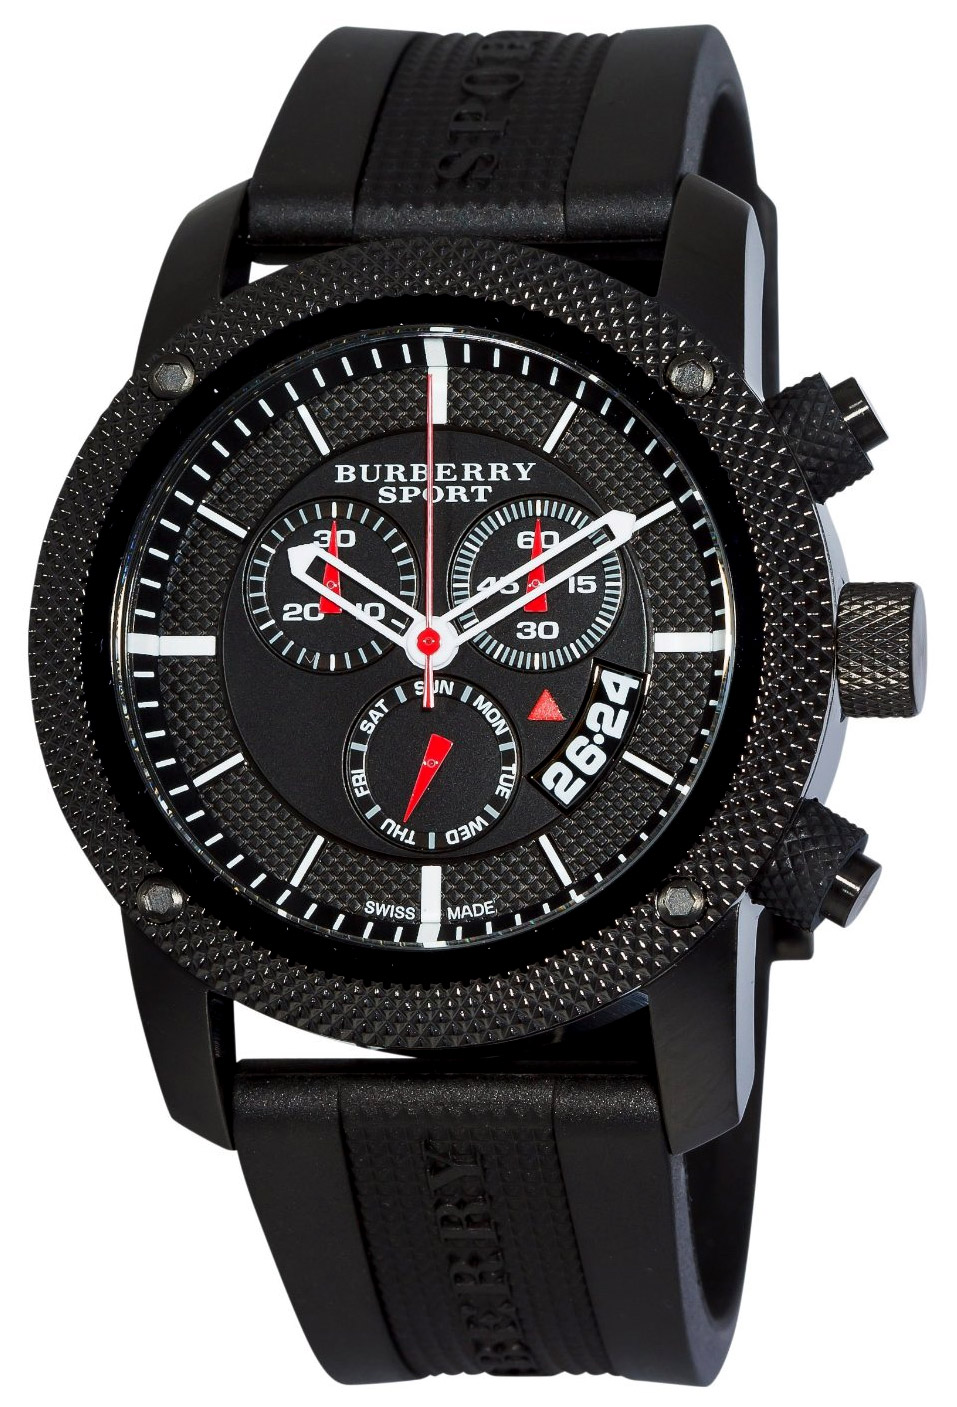 Burberry Sport Chronograph Men's Watch Model: BU7701